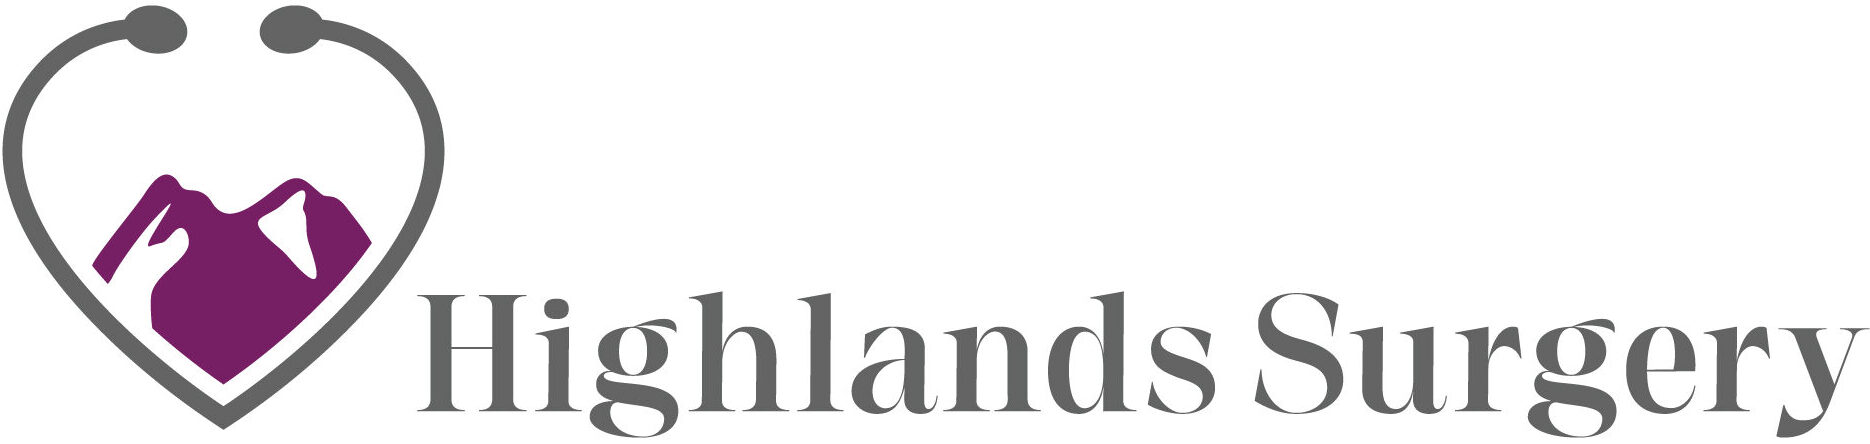 Highlands Surgery logo